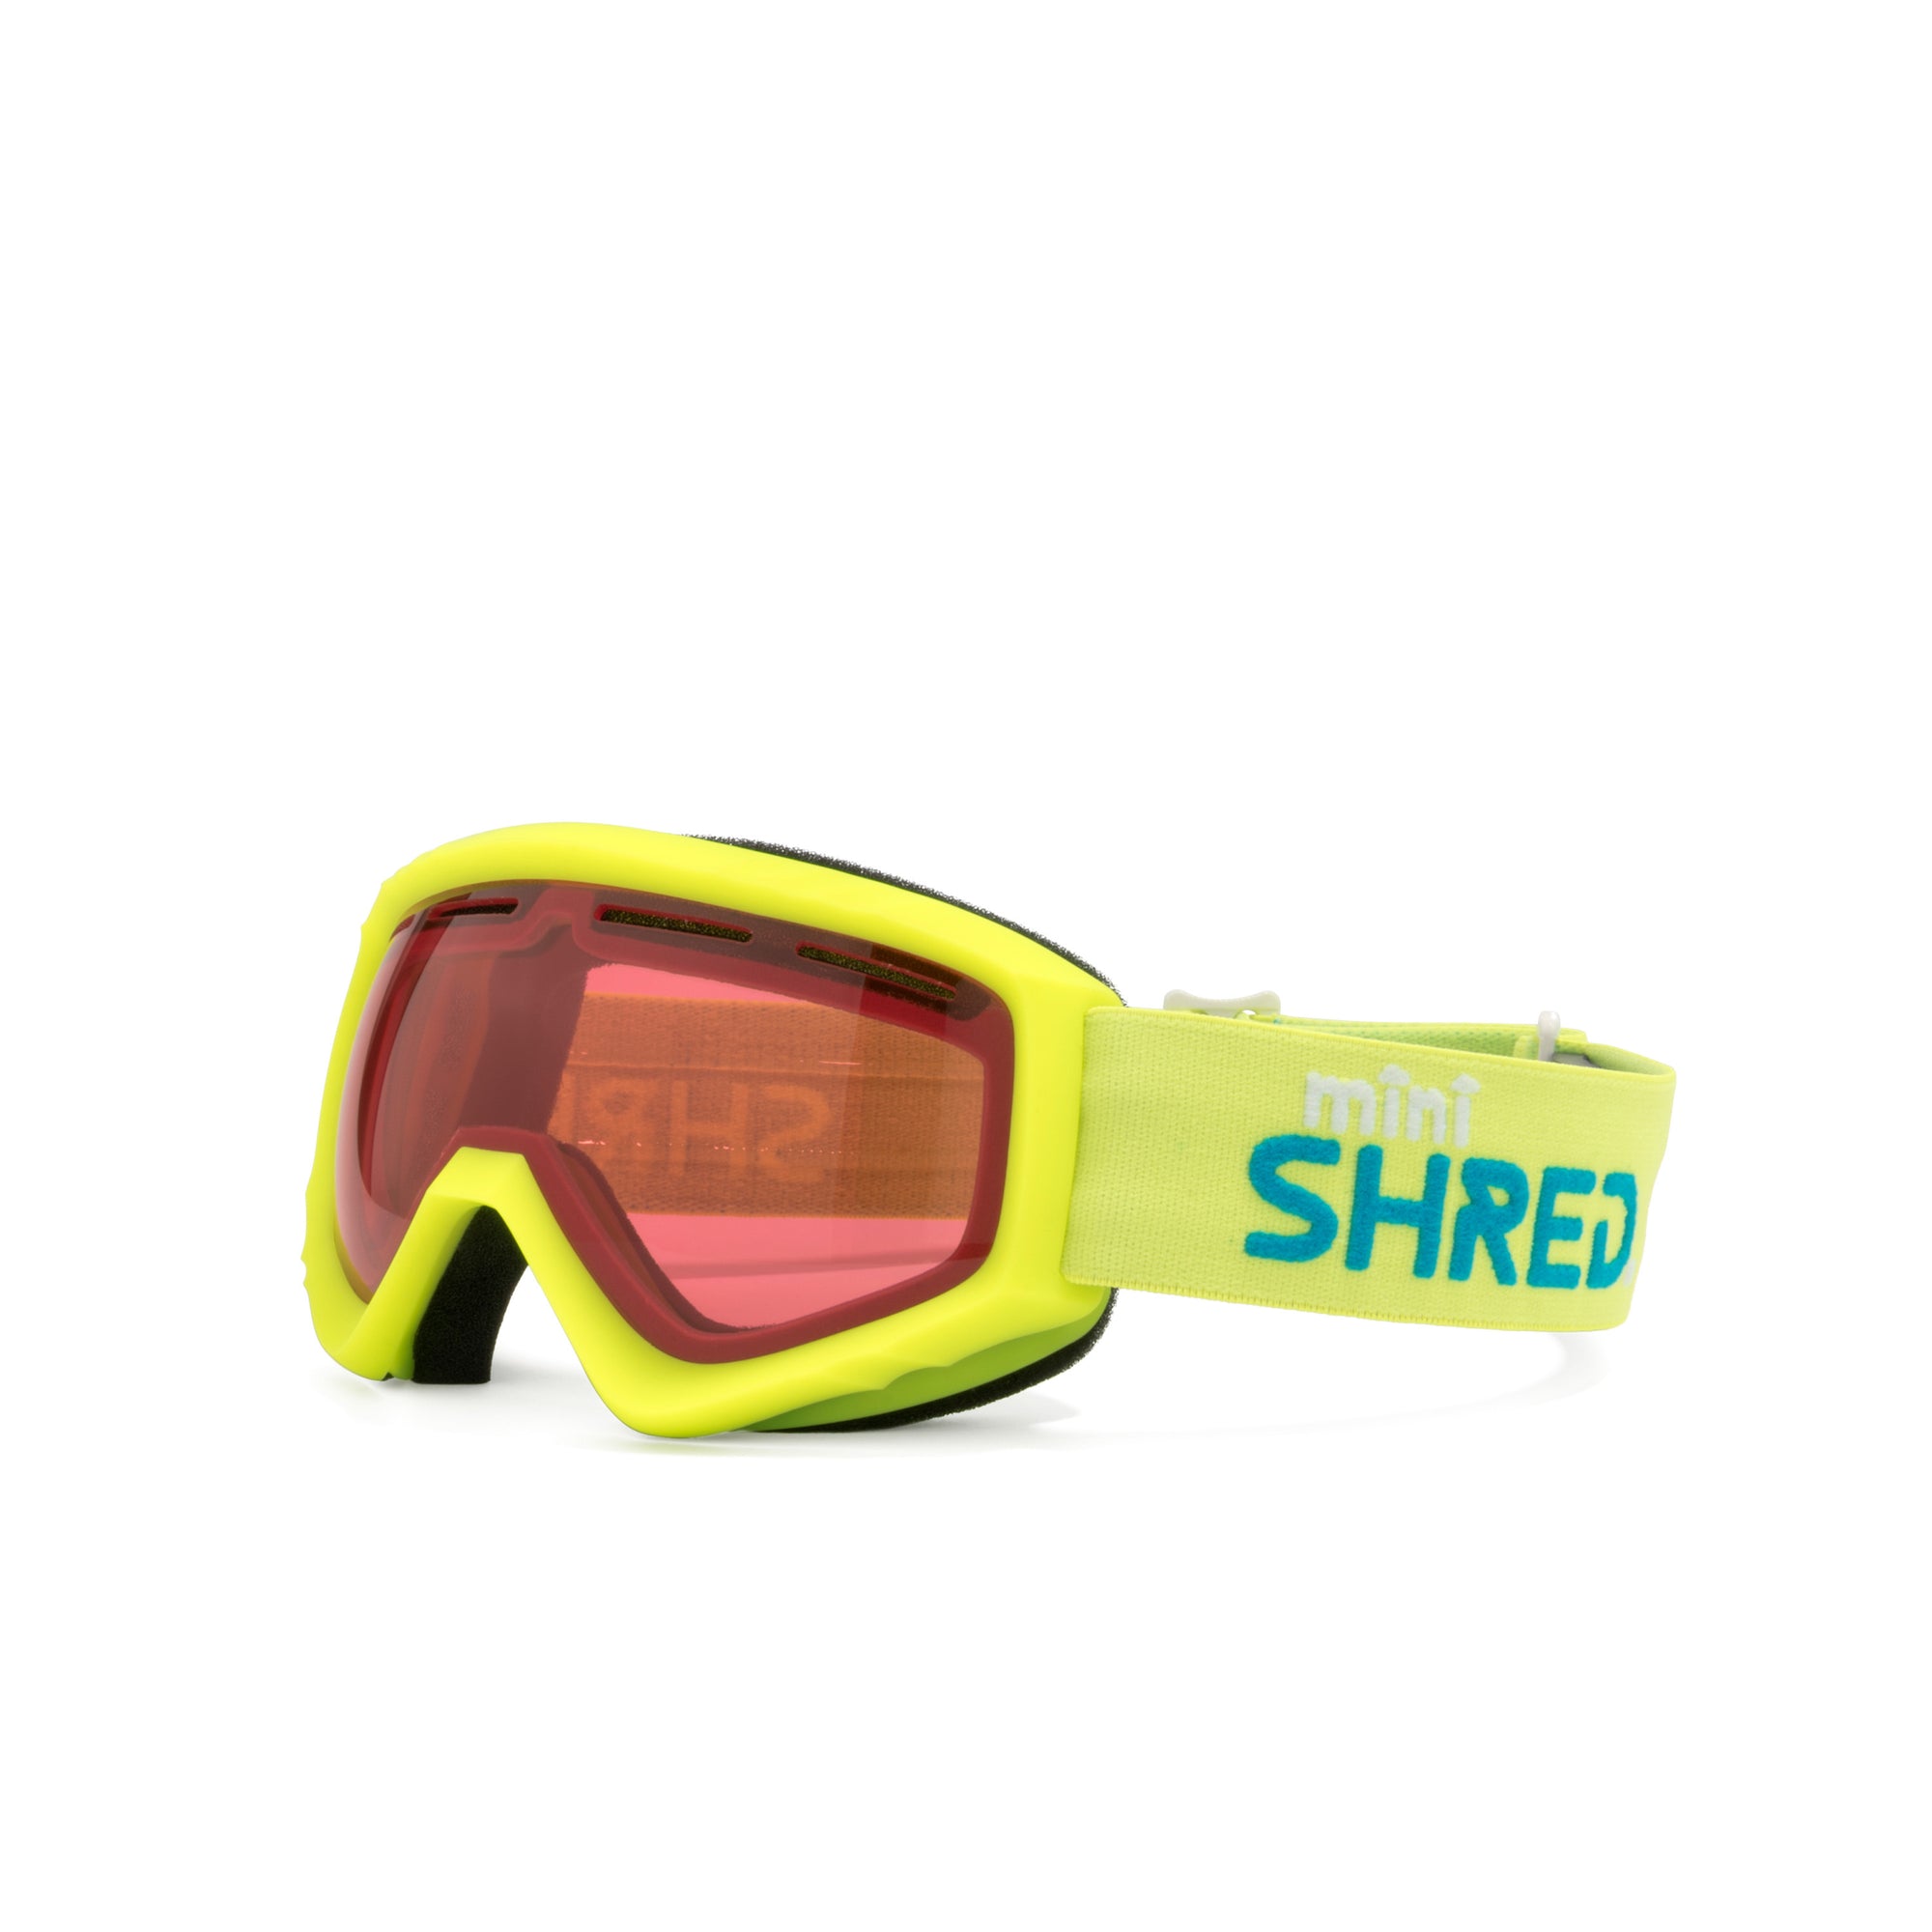 Mini - Ski Goggles|GOMINK12A